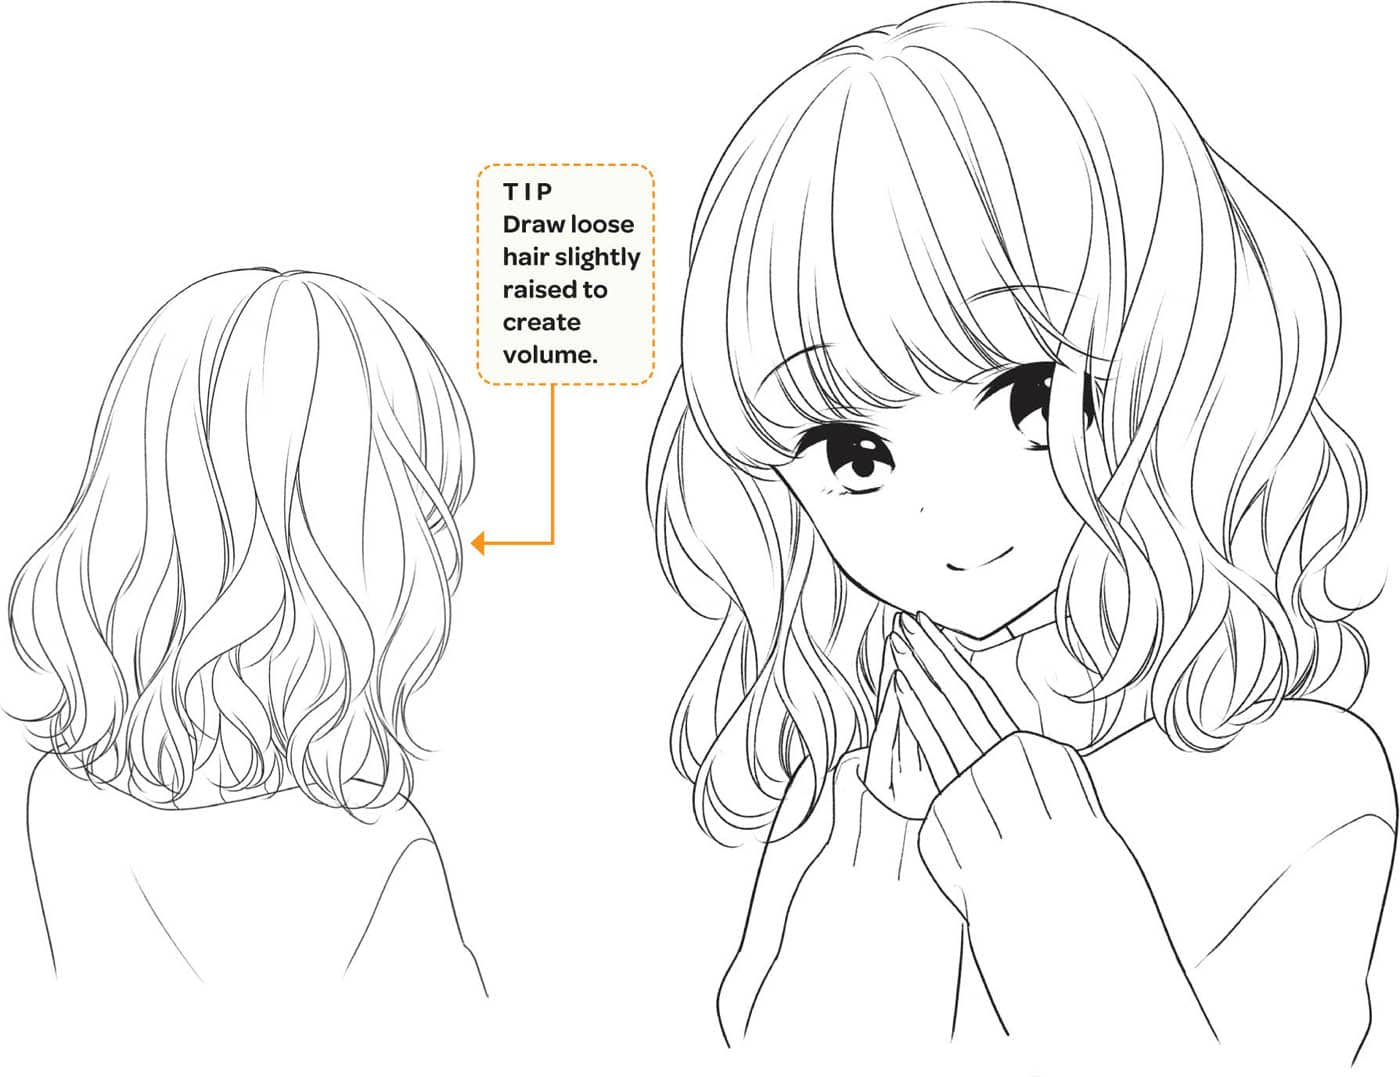 TIP Draw loose hair slightly raised to create volume.